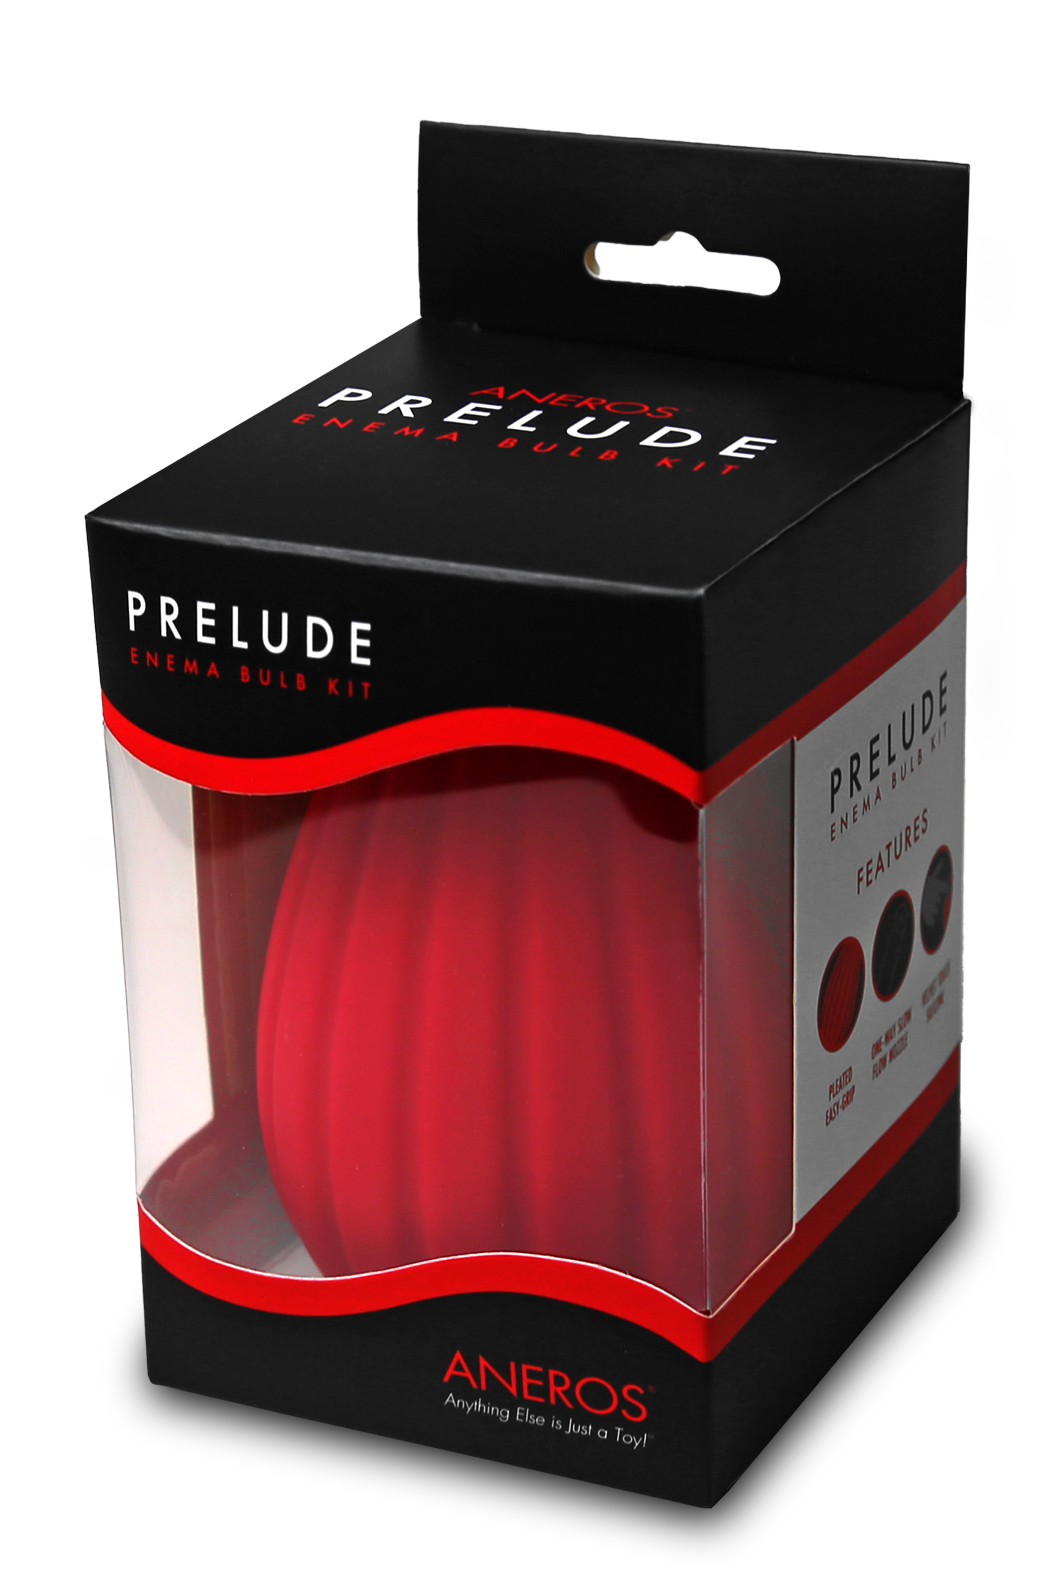 Prelude Enema Bulb Kit - ACME Pleasure